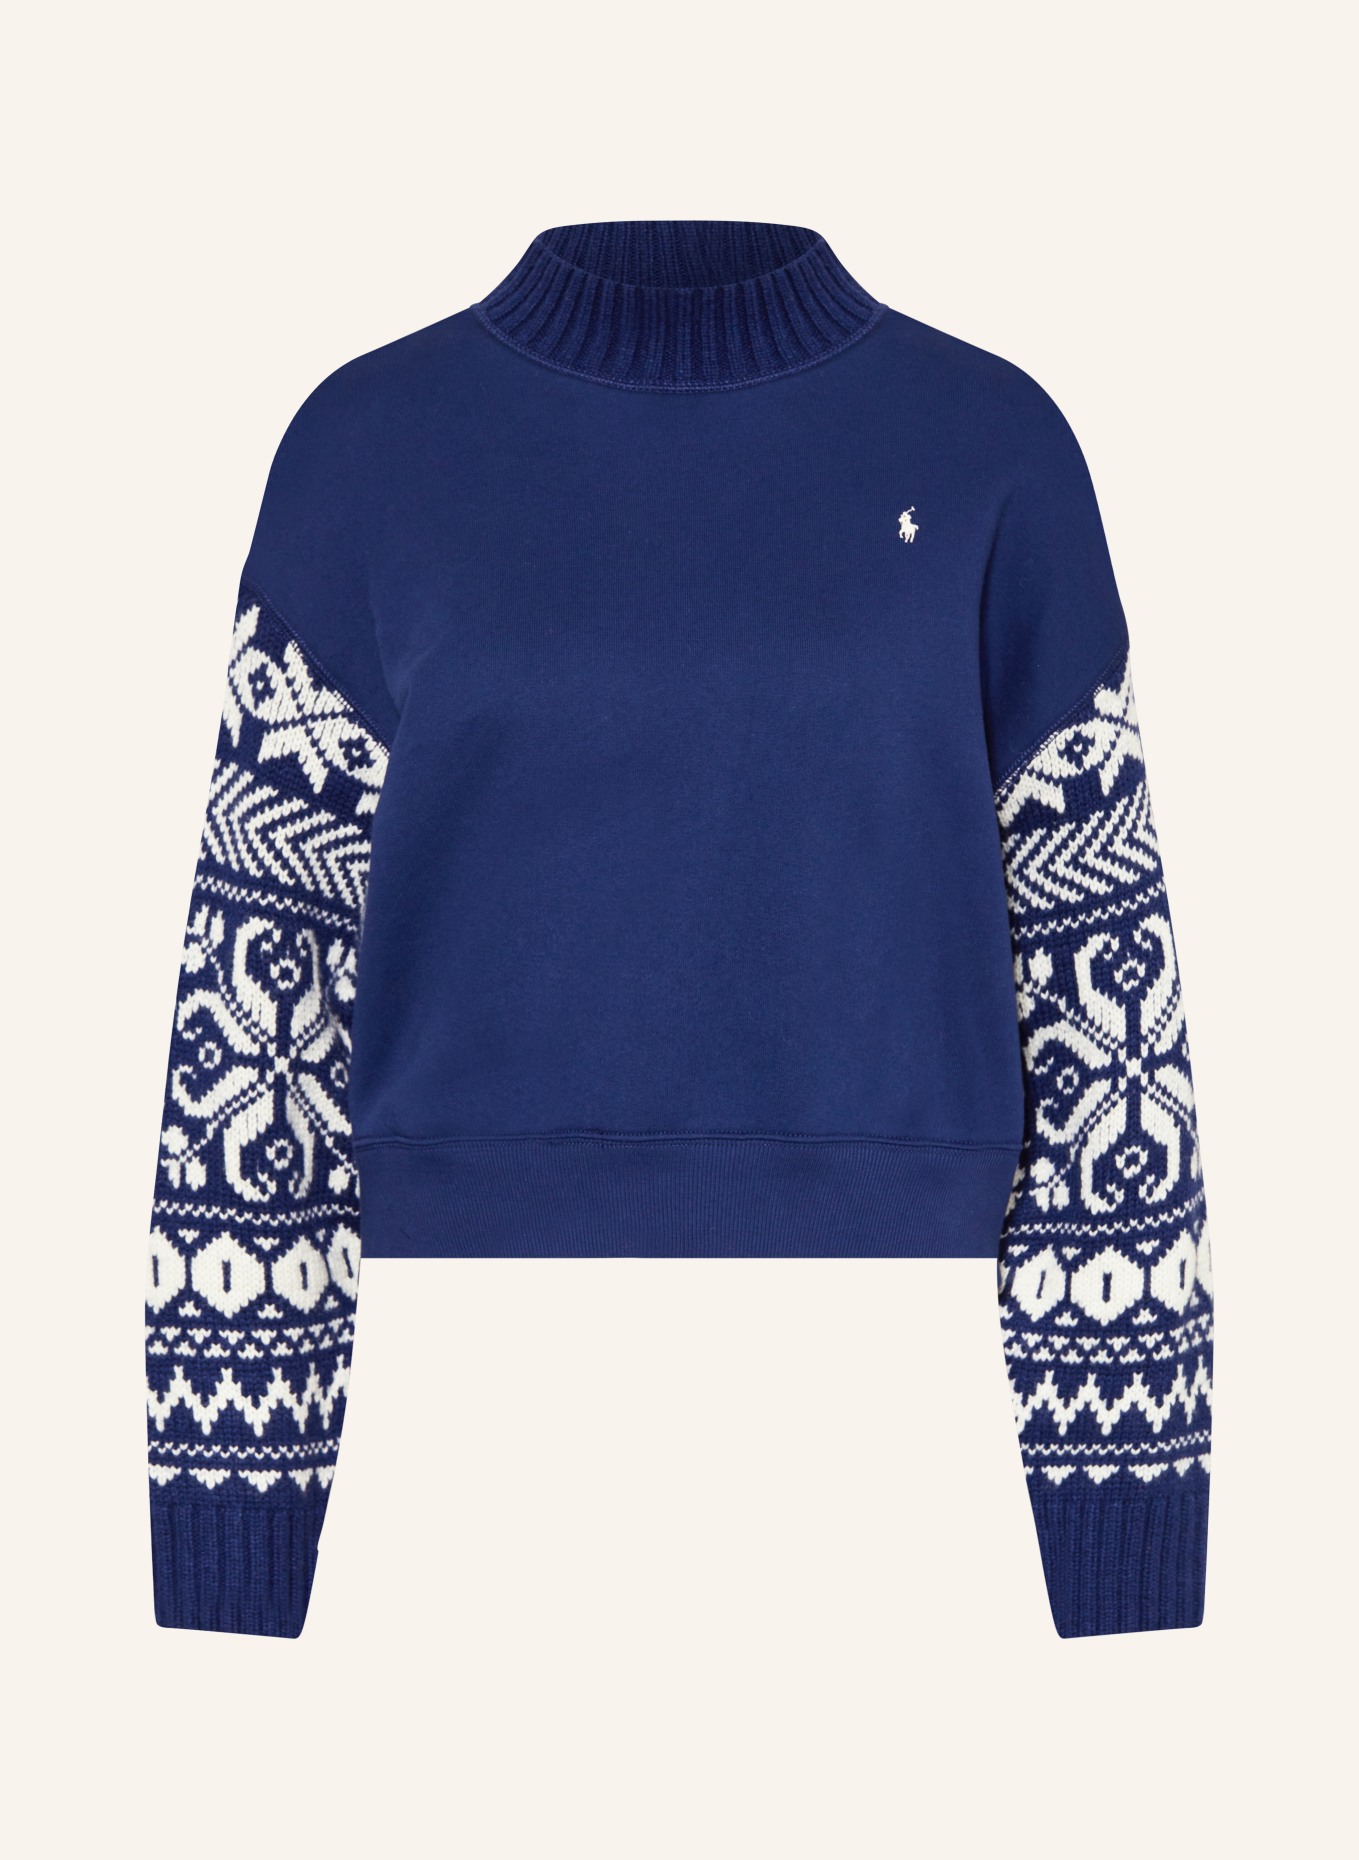 POLO RALPH LAUREN Sweatshirt im Materialmix, Farbe: DUNKELBLAU/ WEISS (Bild 1)